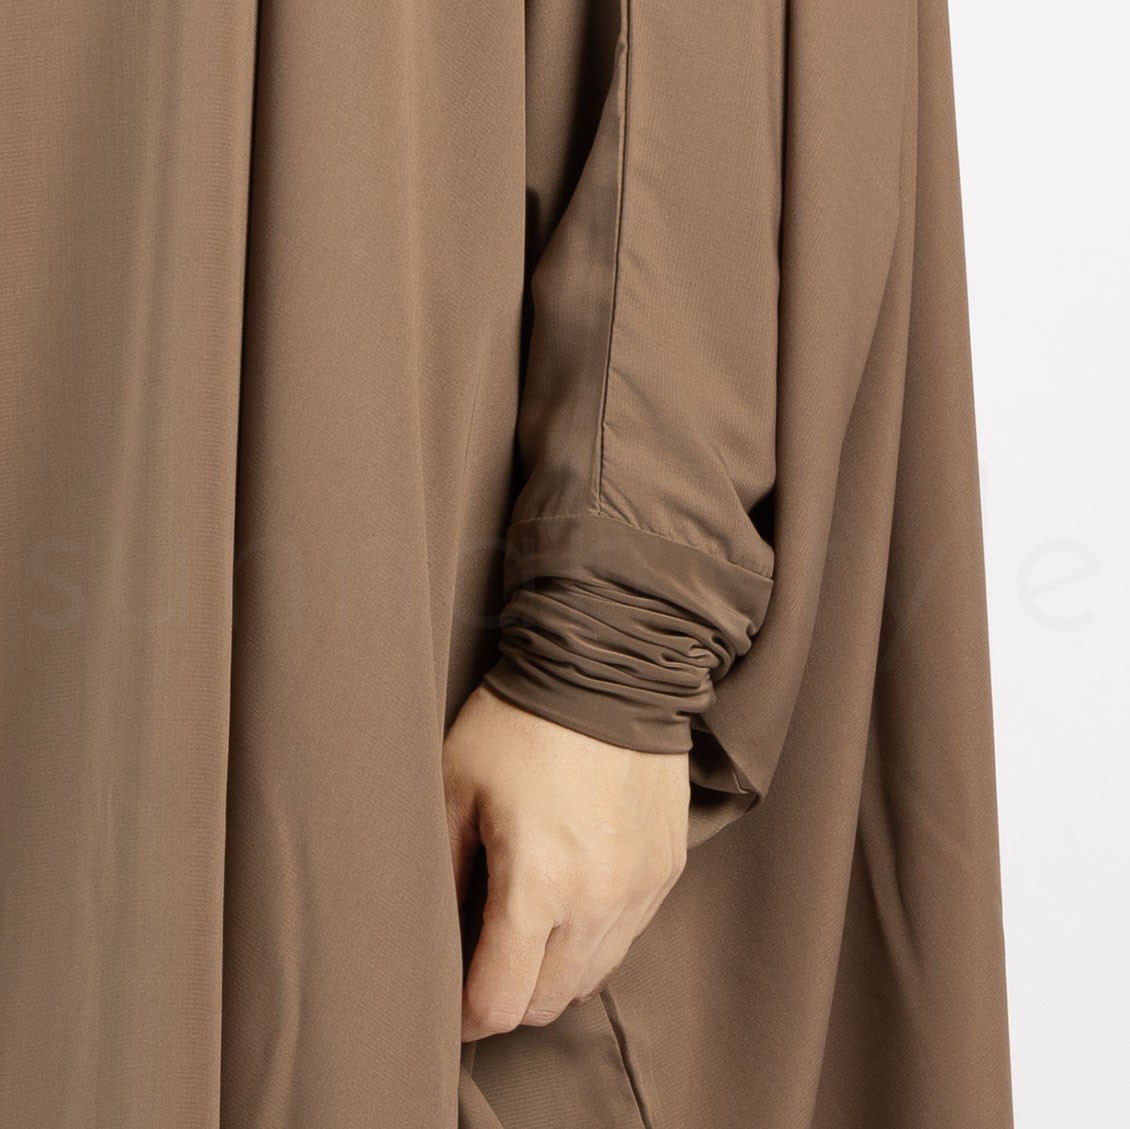 Sunnah Style Plain Jilbab Top Knee Length Tan